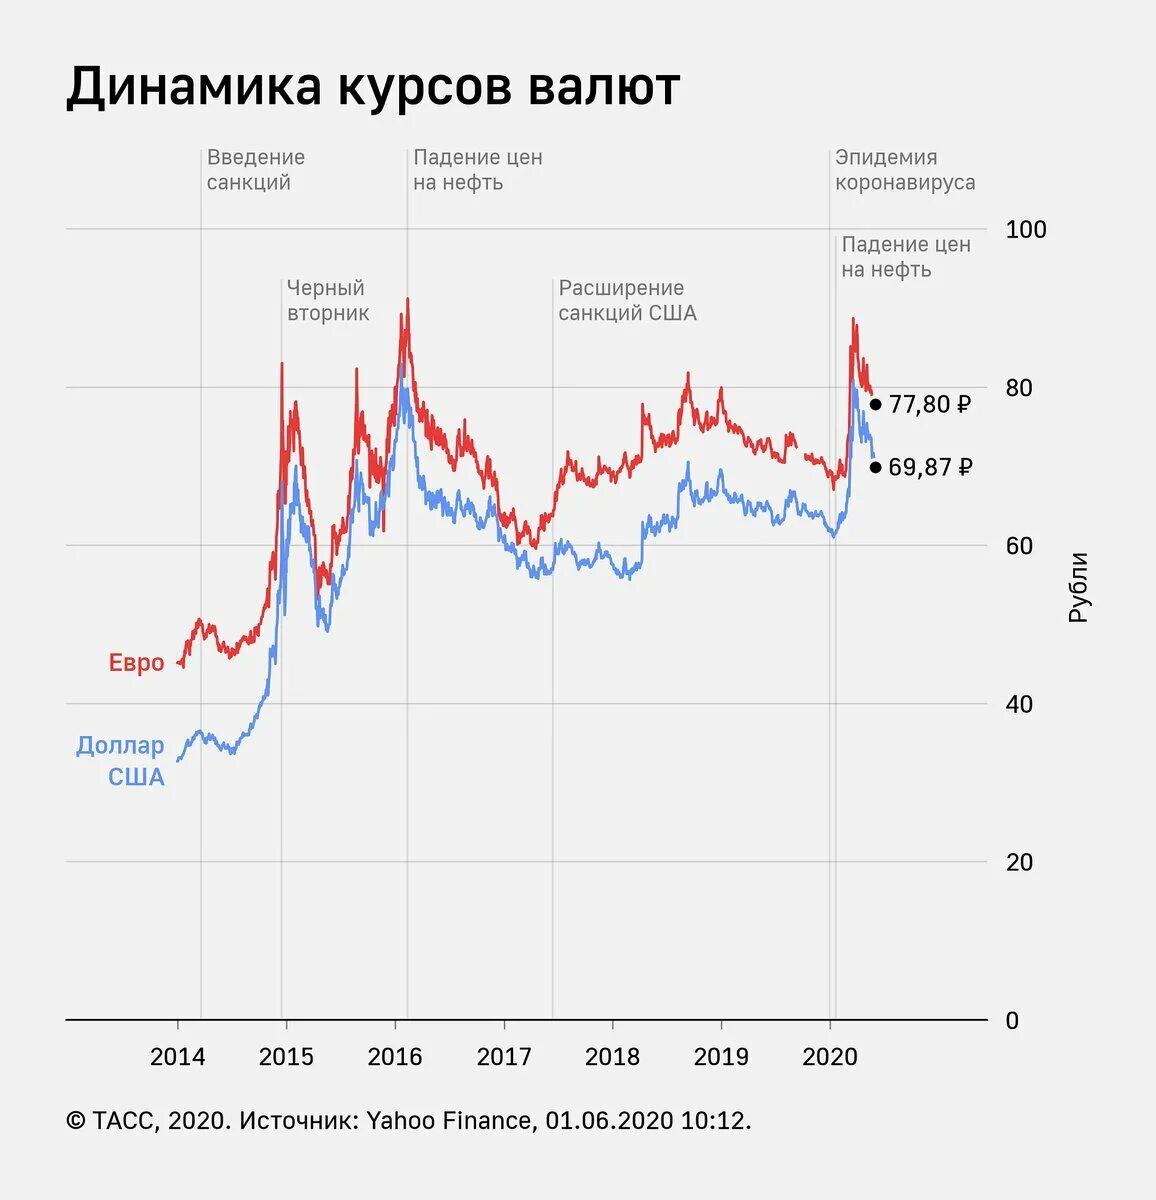 Валютная динамик. Курс доллара к рублю график за 5 лет по месяцам динамика. Динамика доллара за 100 лет график. Динамика курса евро к рублю 2020. Динамика курса доллара за год график по месяцам.